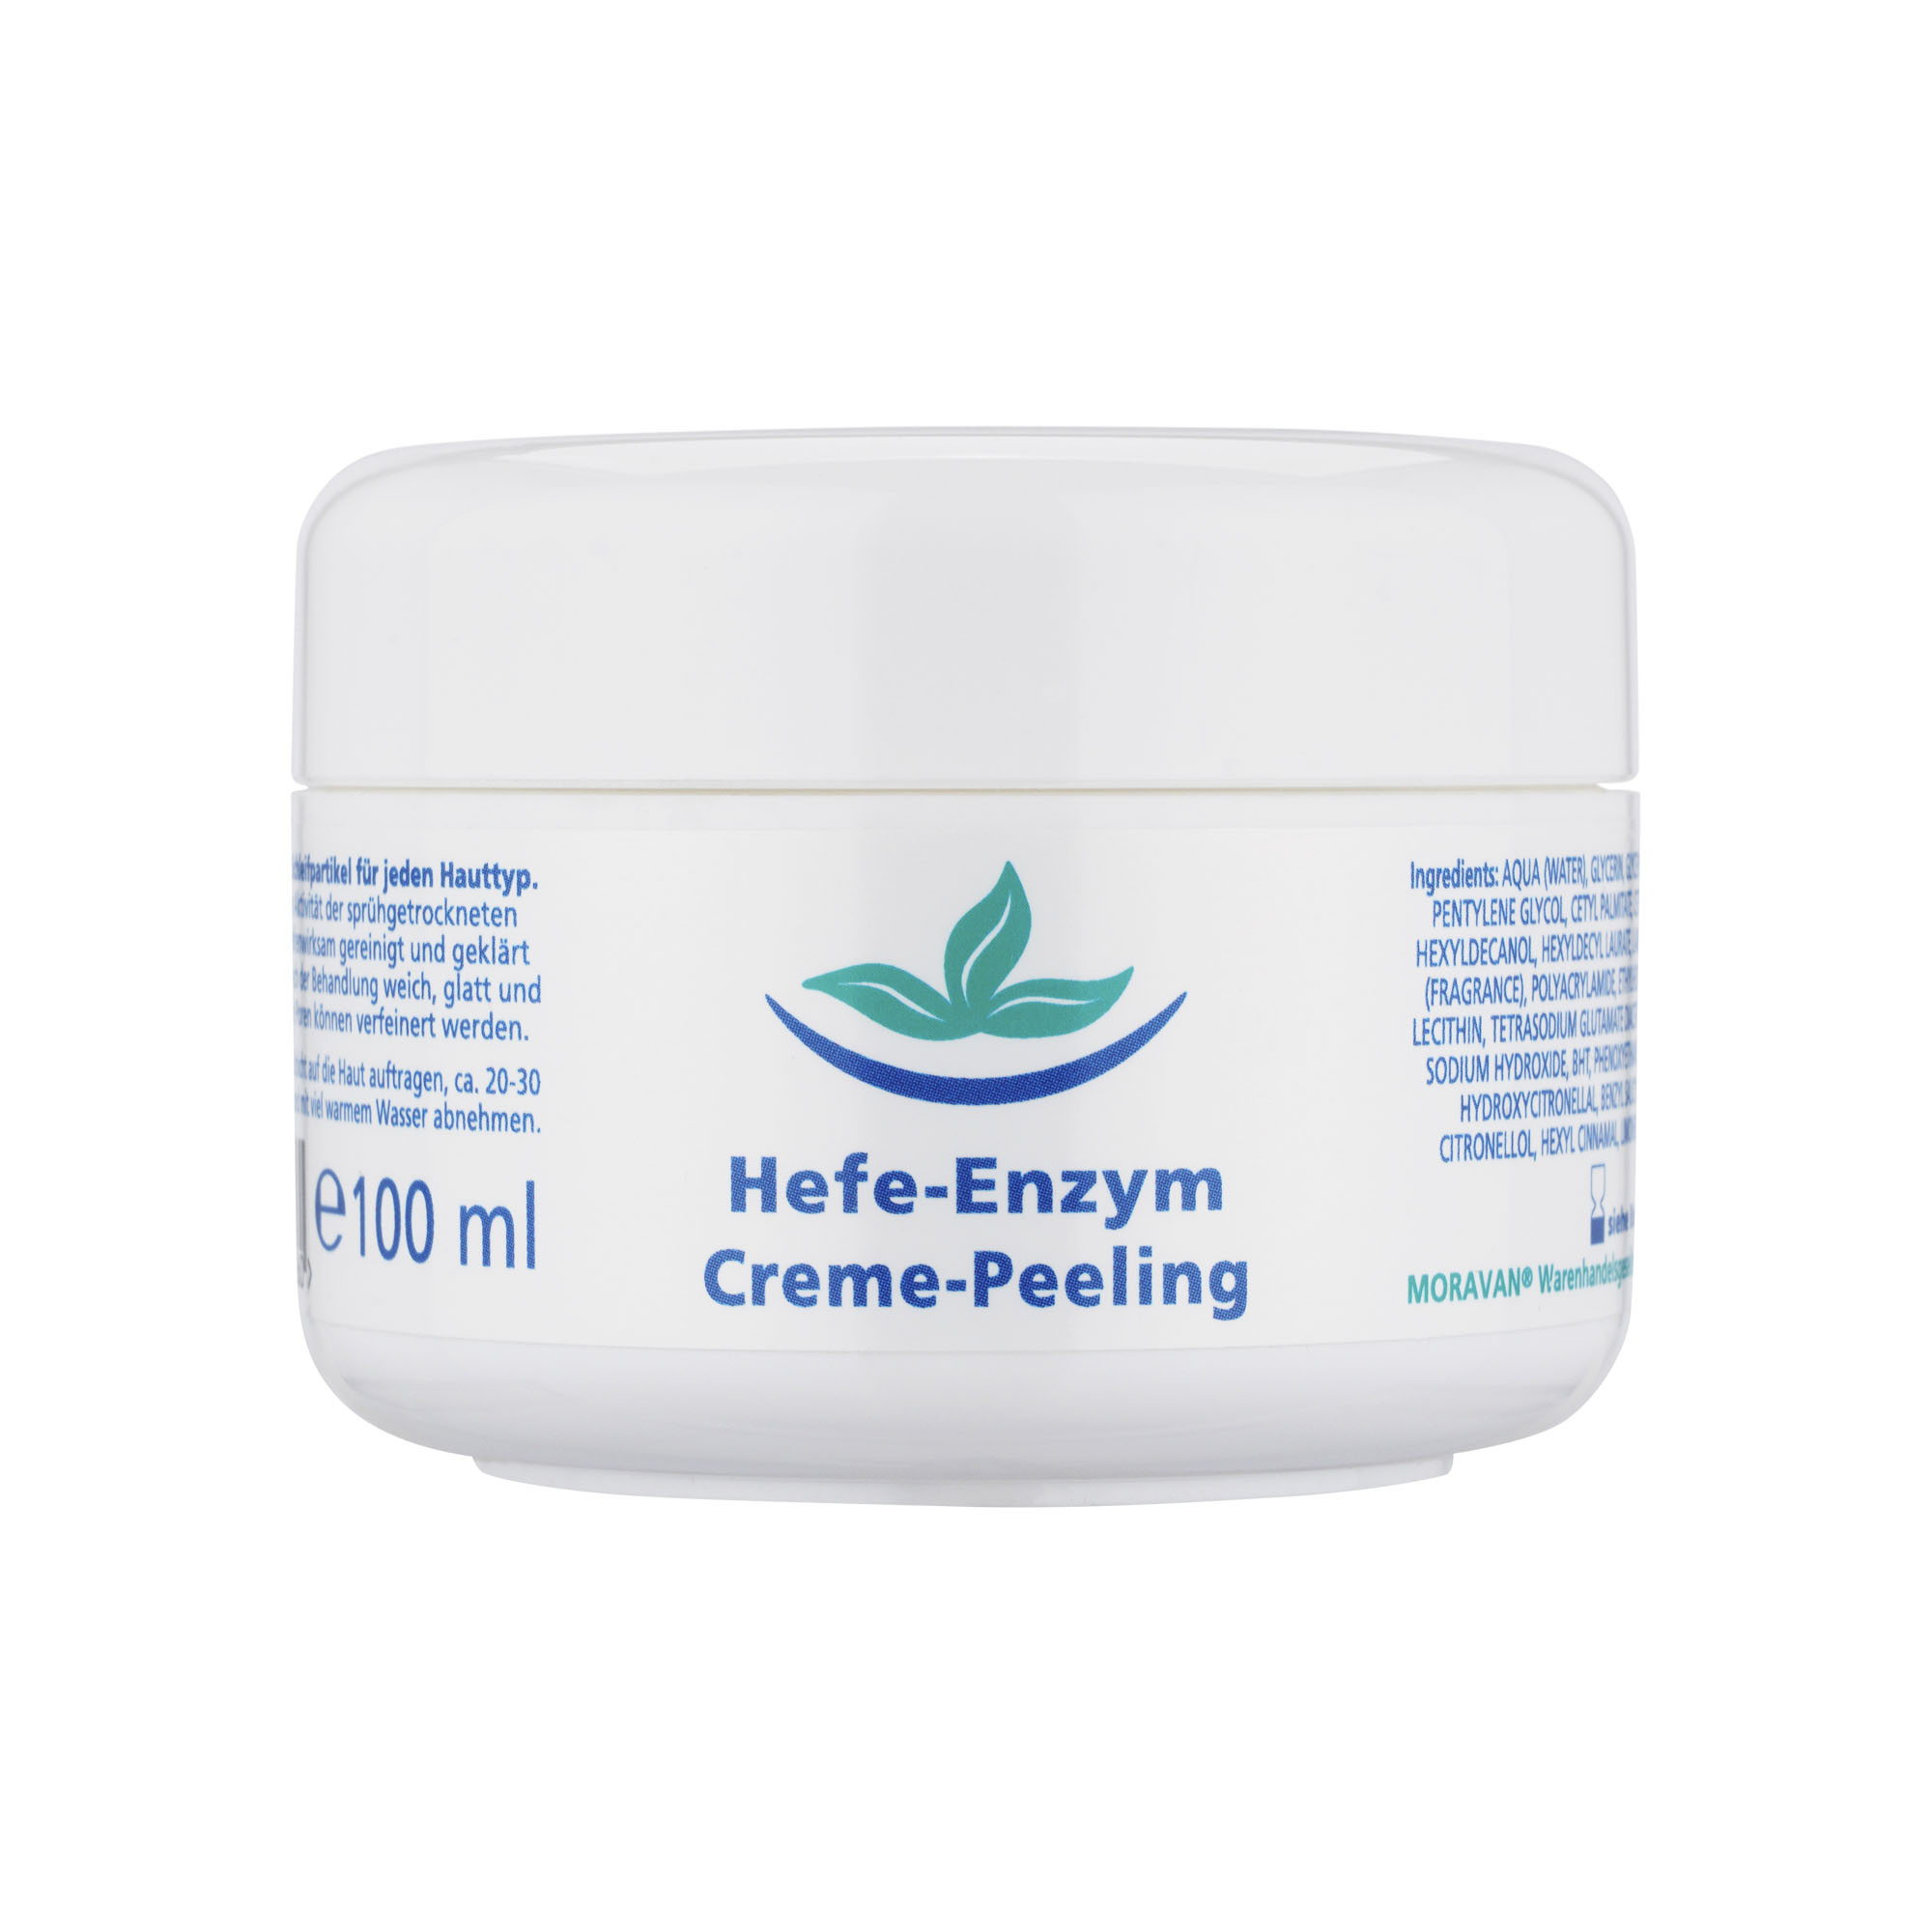 Hefe-Enzym Creme-Peeling